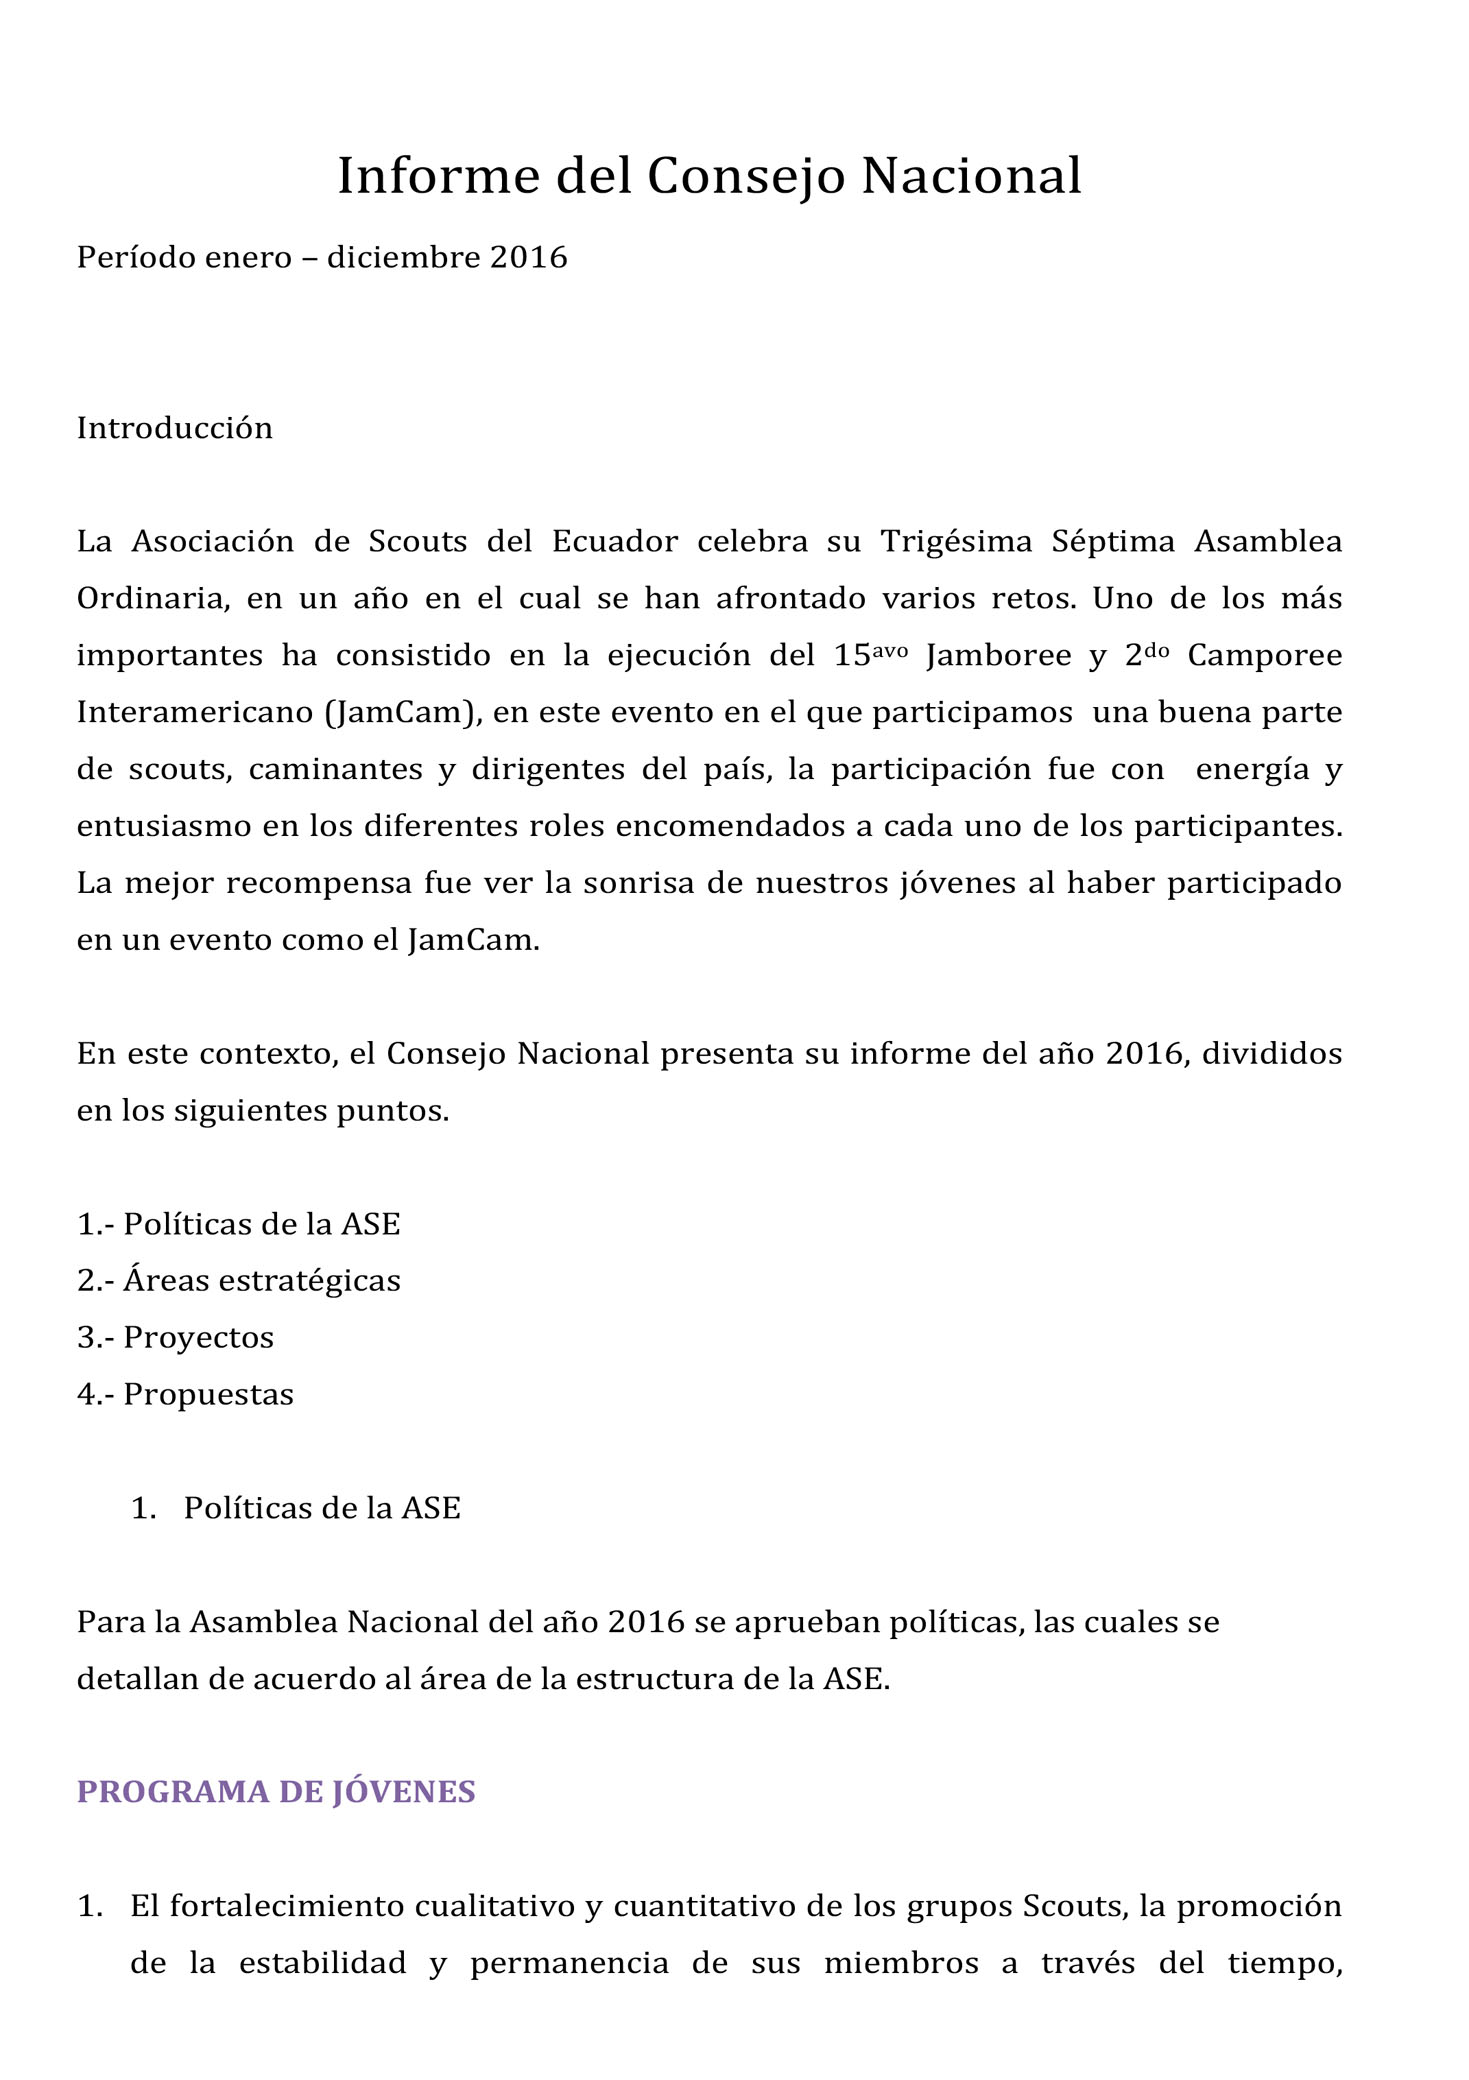 Informe Consejo Nacional 2016.